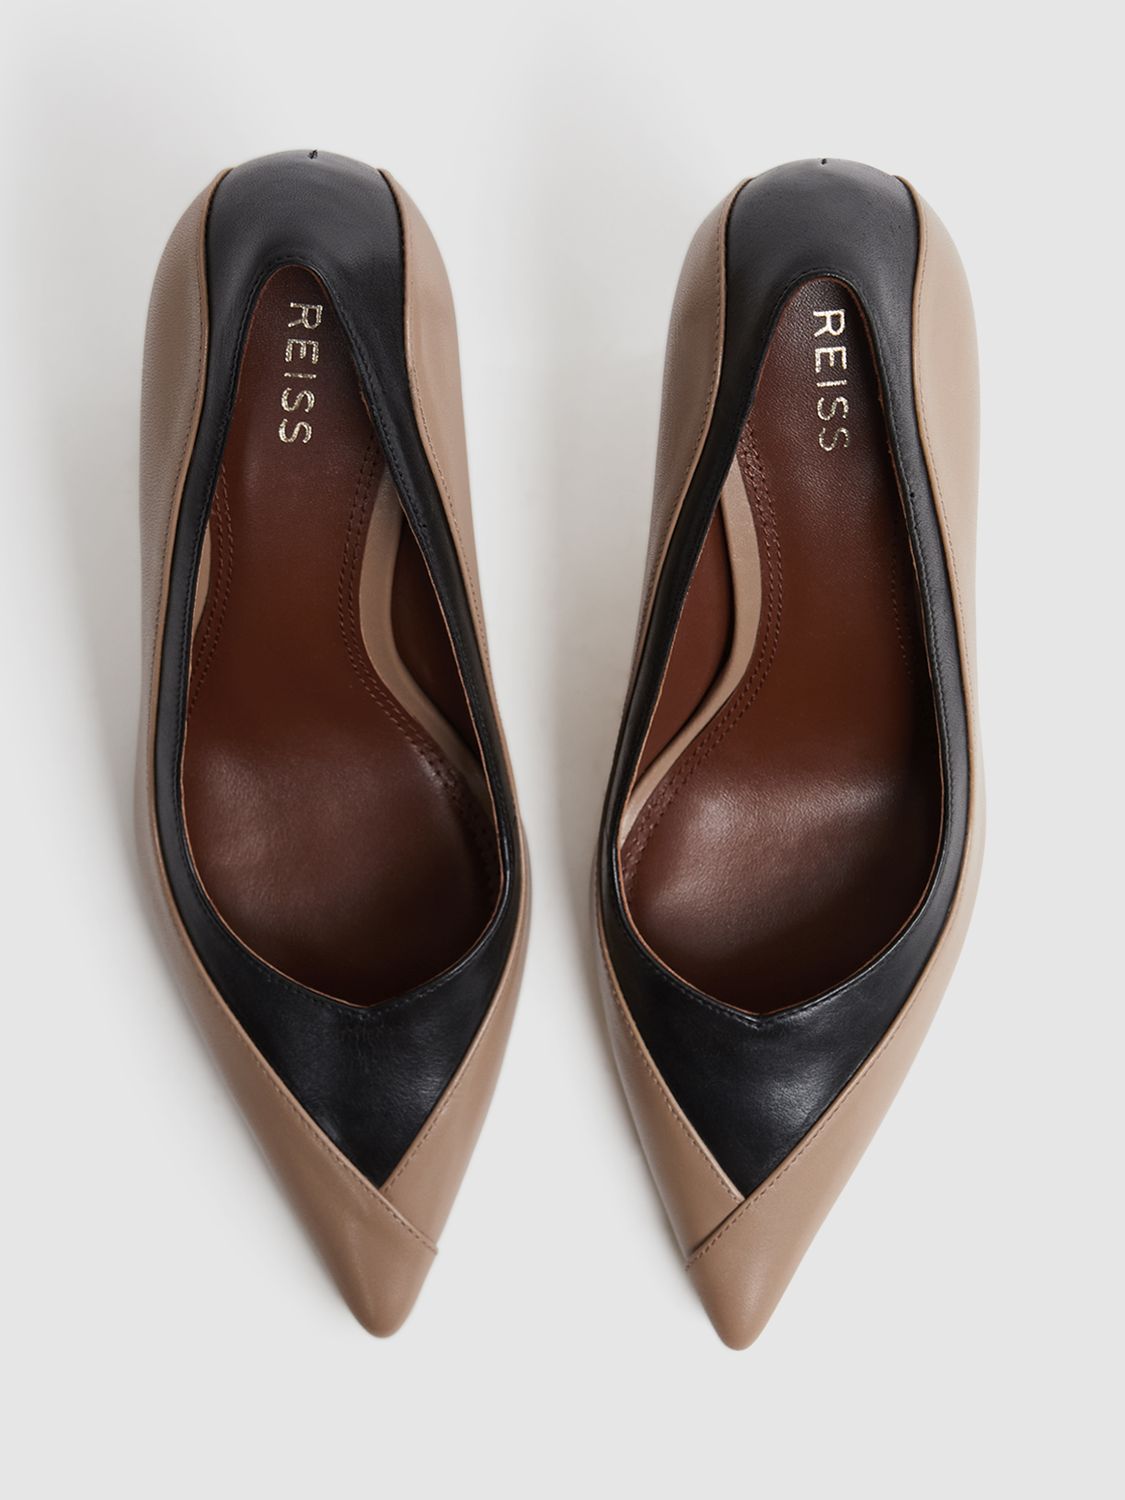 Reiss Gwyneth High Heel Leather Court Shoes, Camel/Black, 4